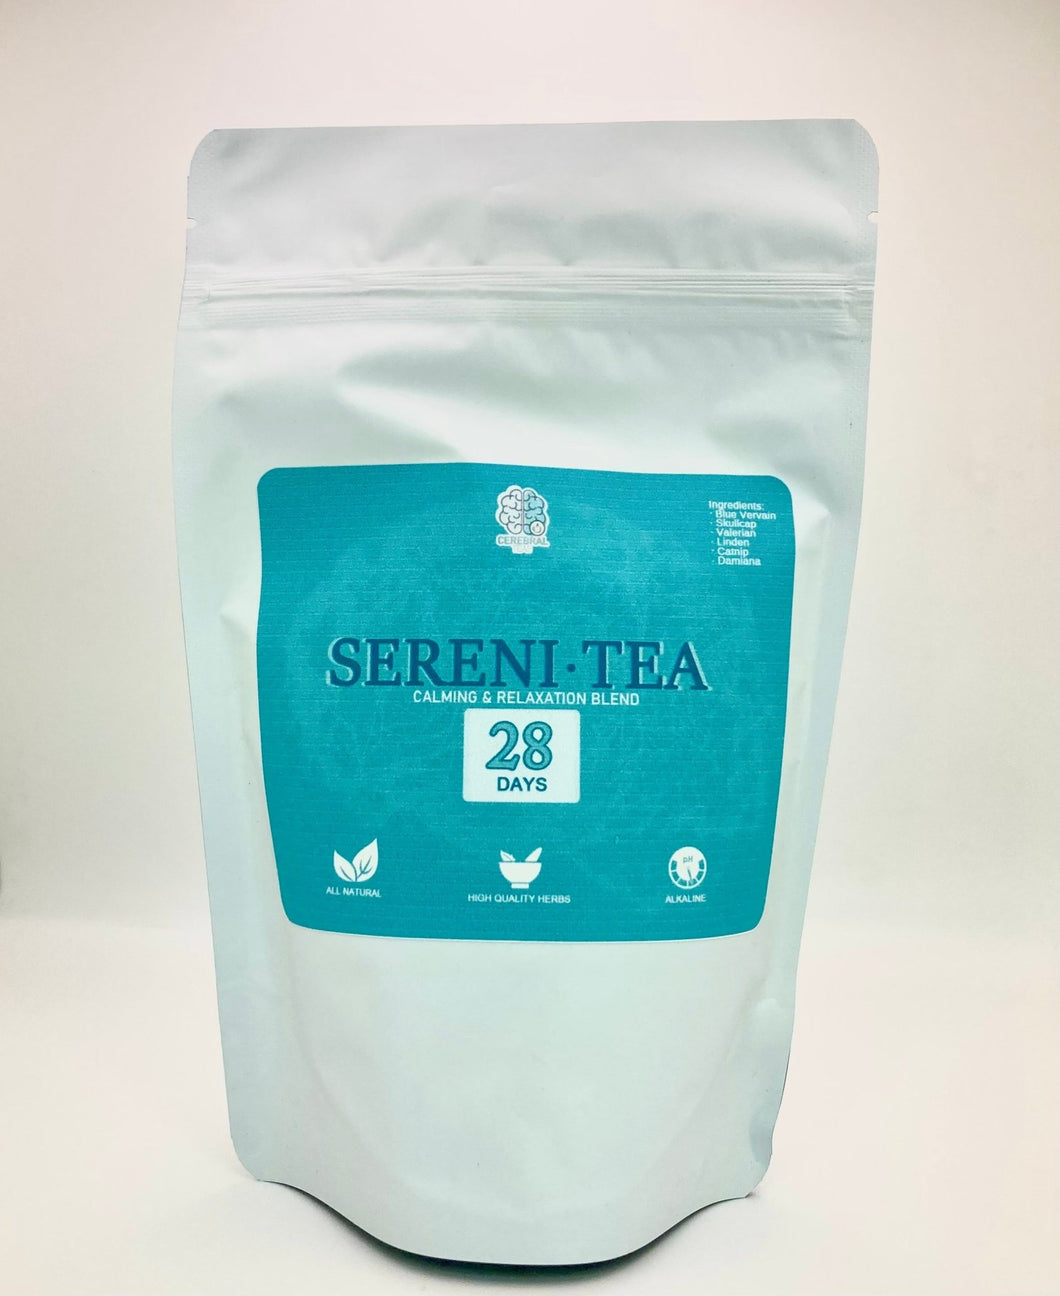 Sereni-Tea: Calming & Relaxation Blend - 28 Day Supply - Cerebral Tea Company